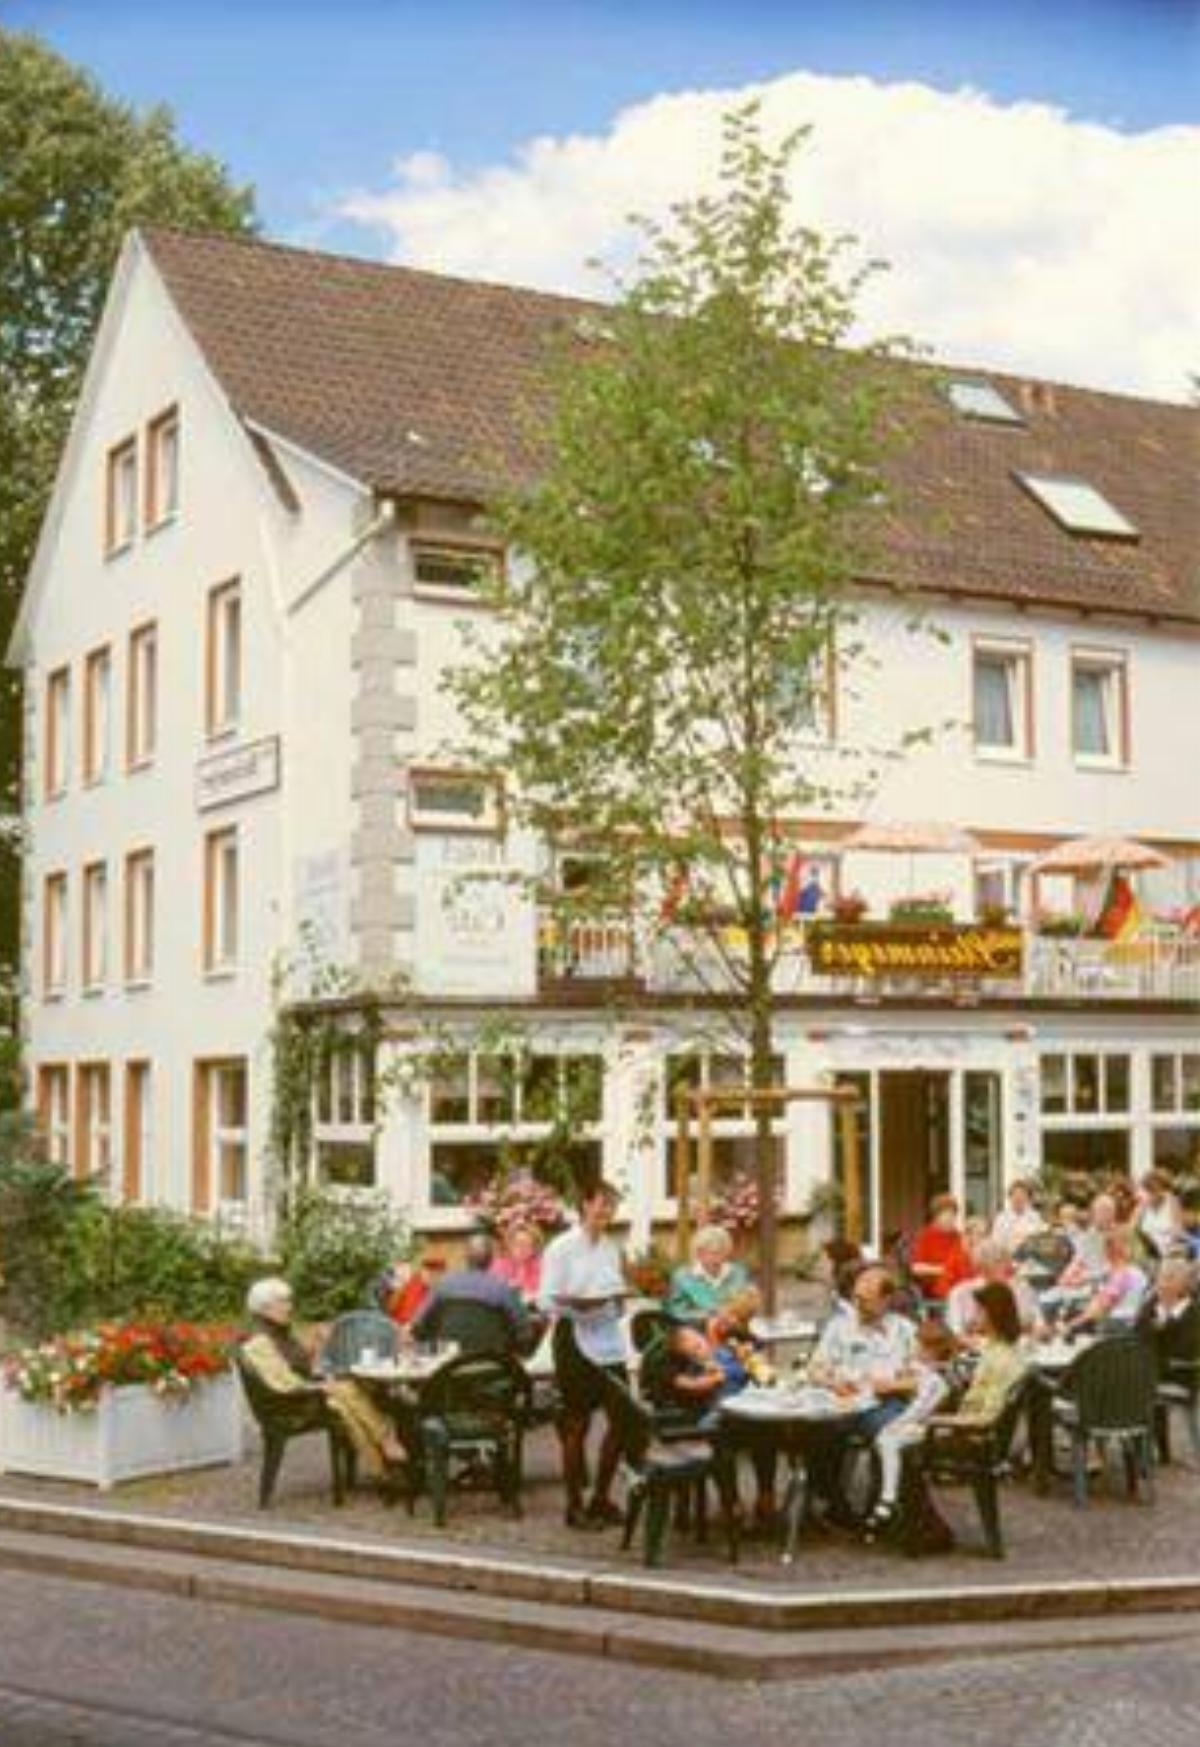 Haus Steinmeyer Hotel Bad Pyrmont Germany